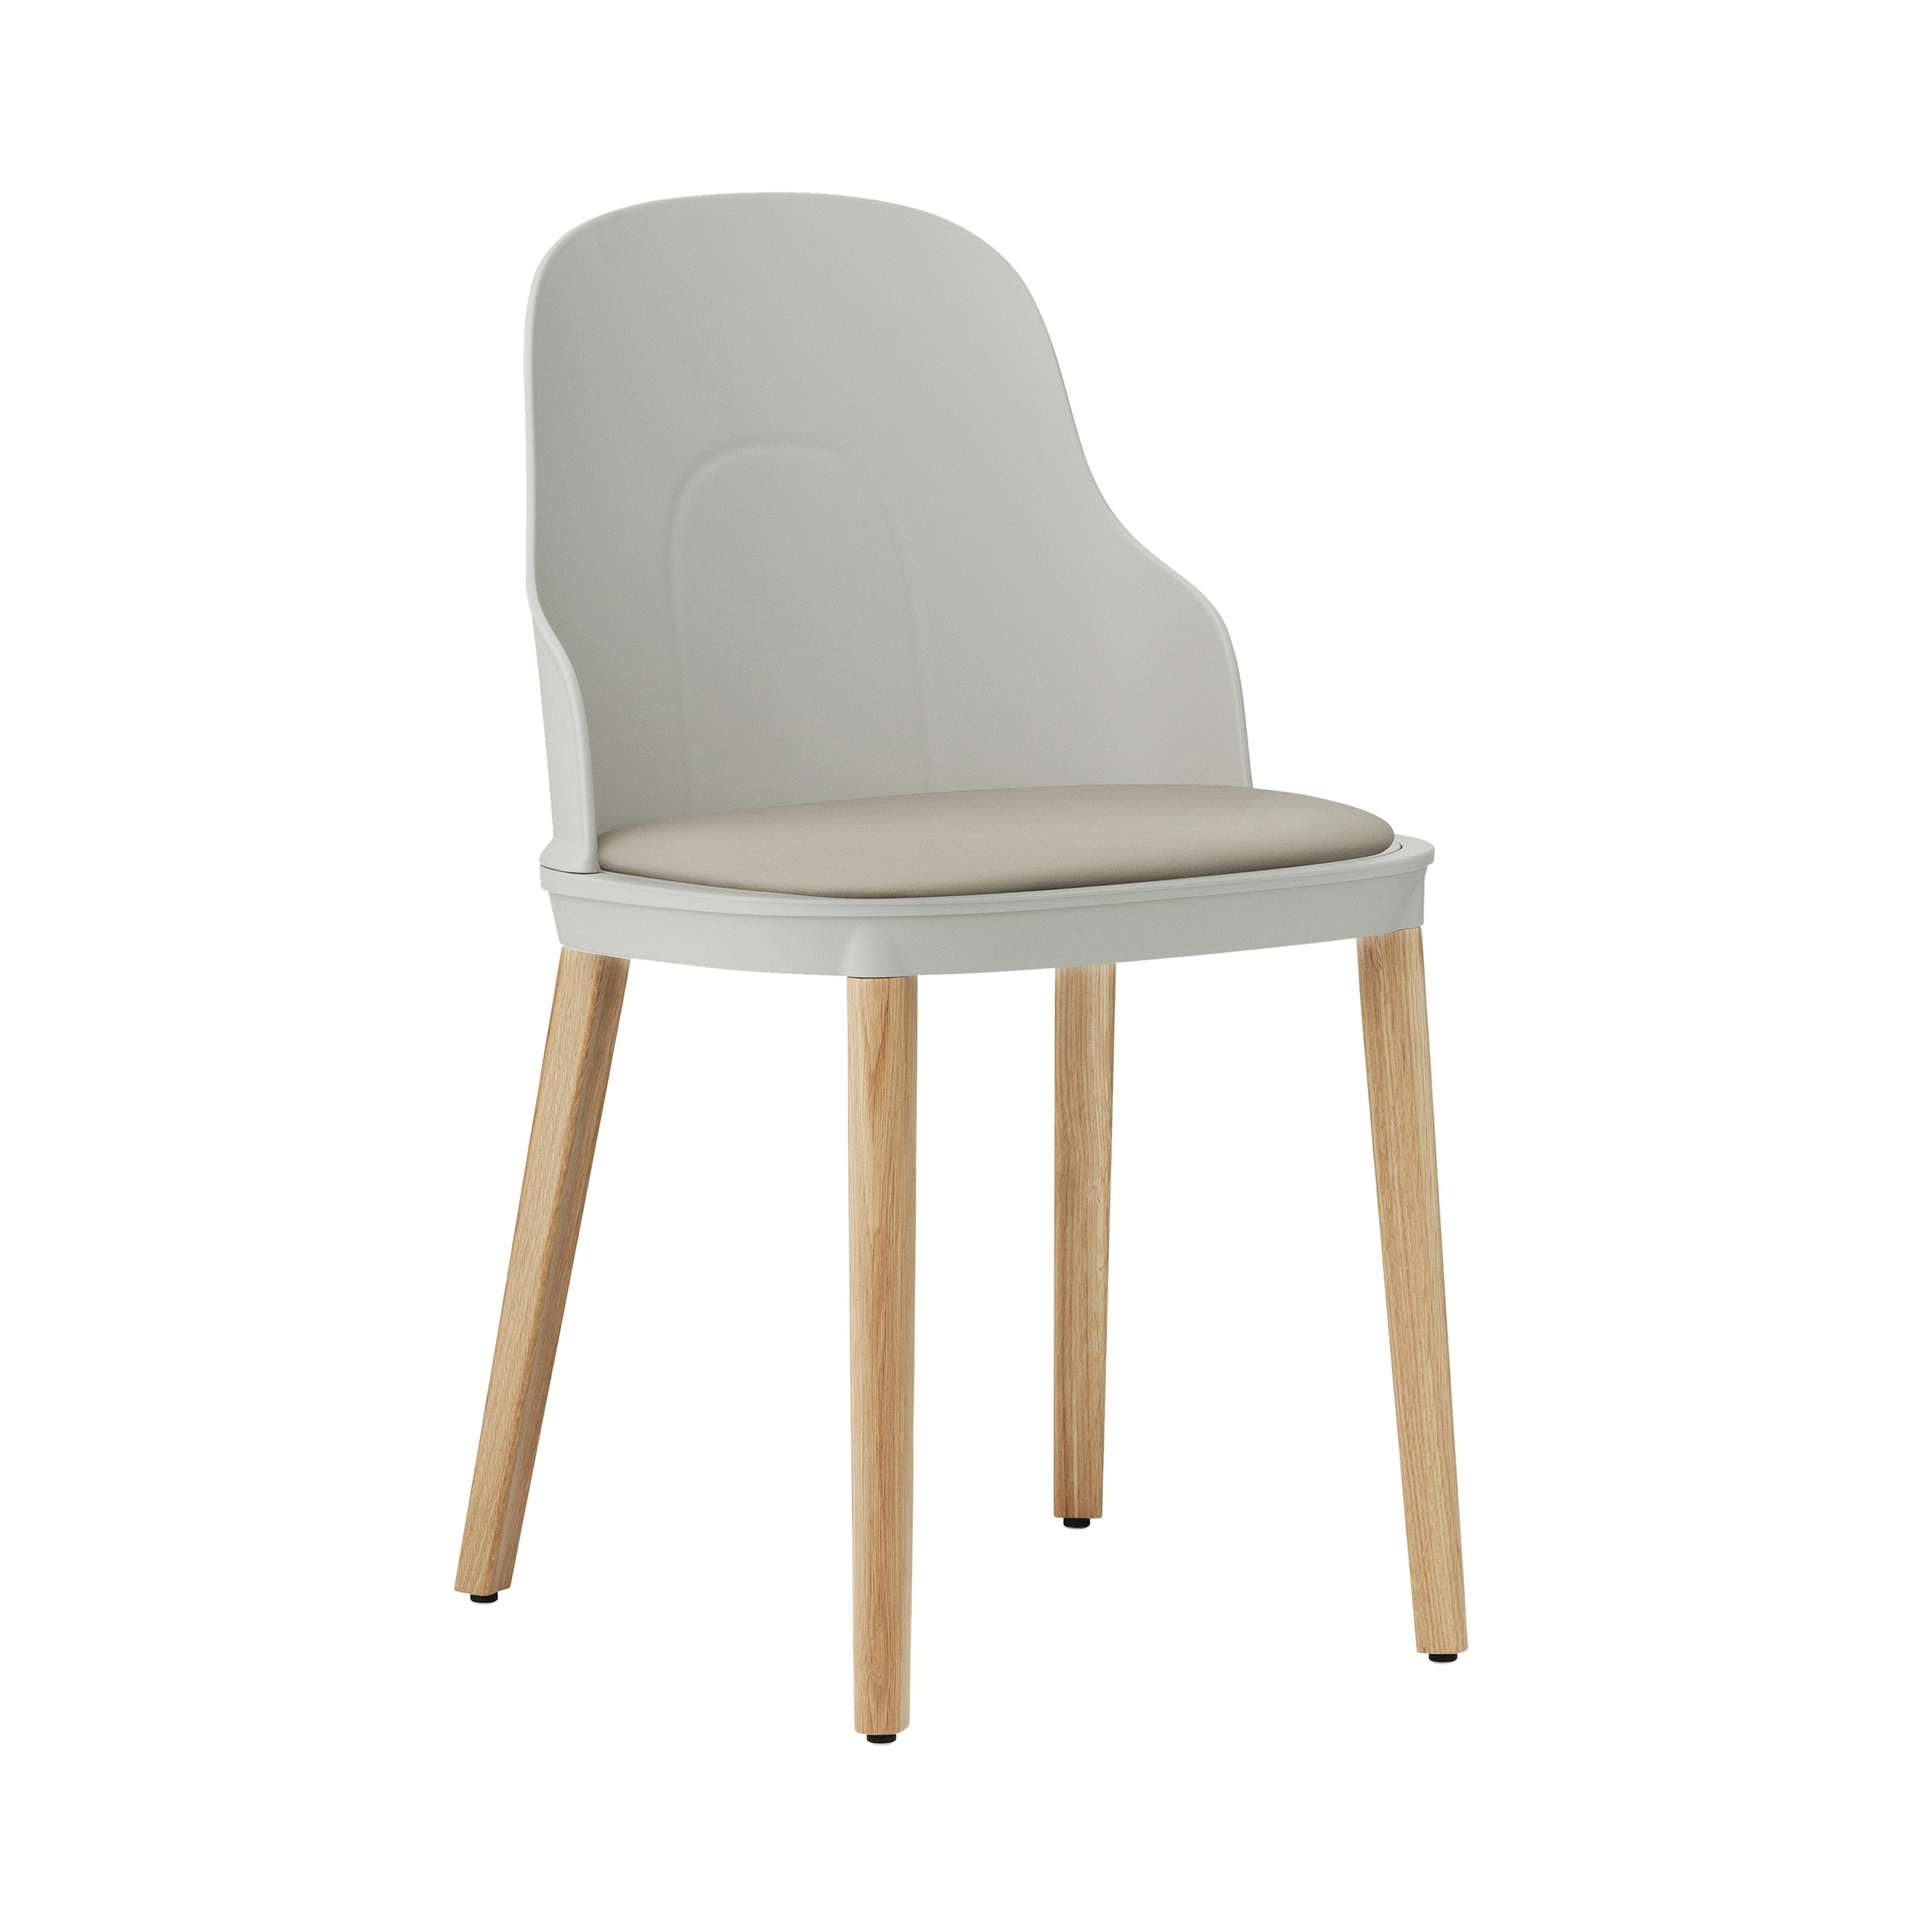 Allez Chair: Upholstered + Warm Grey + Oak